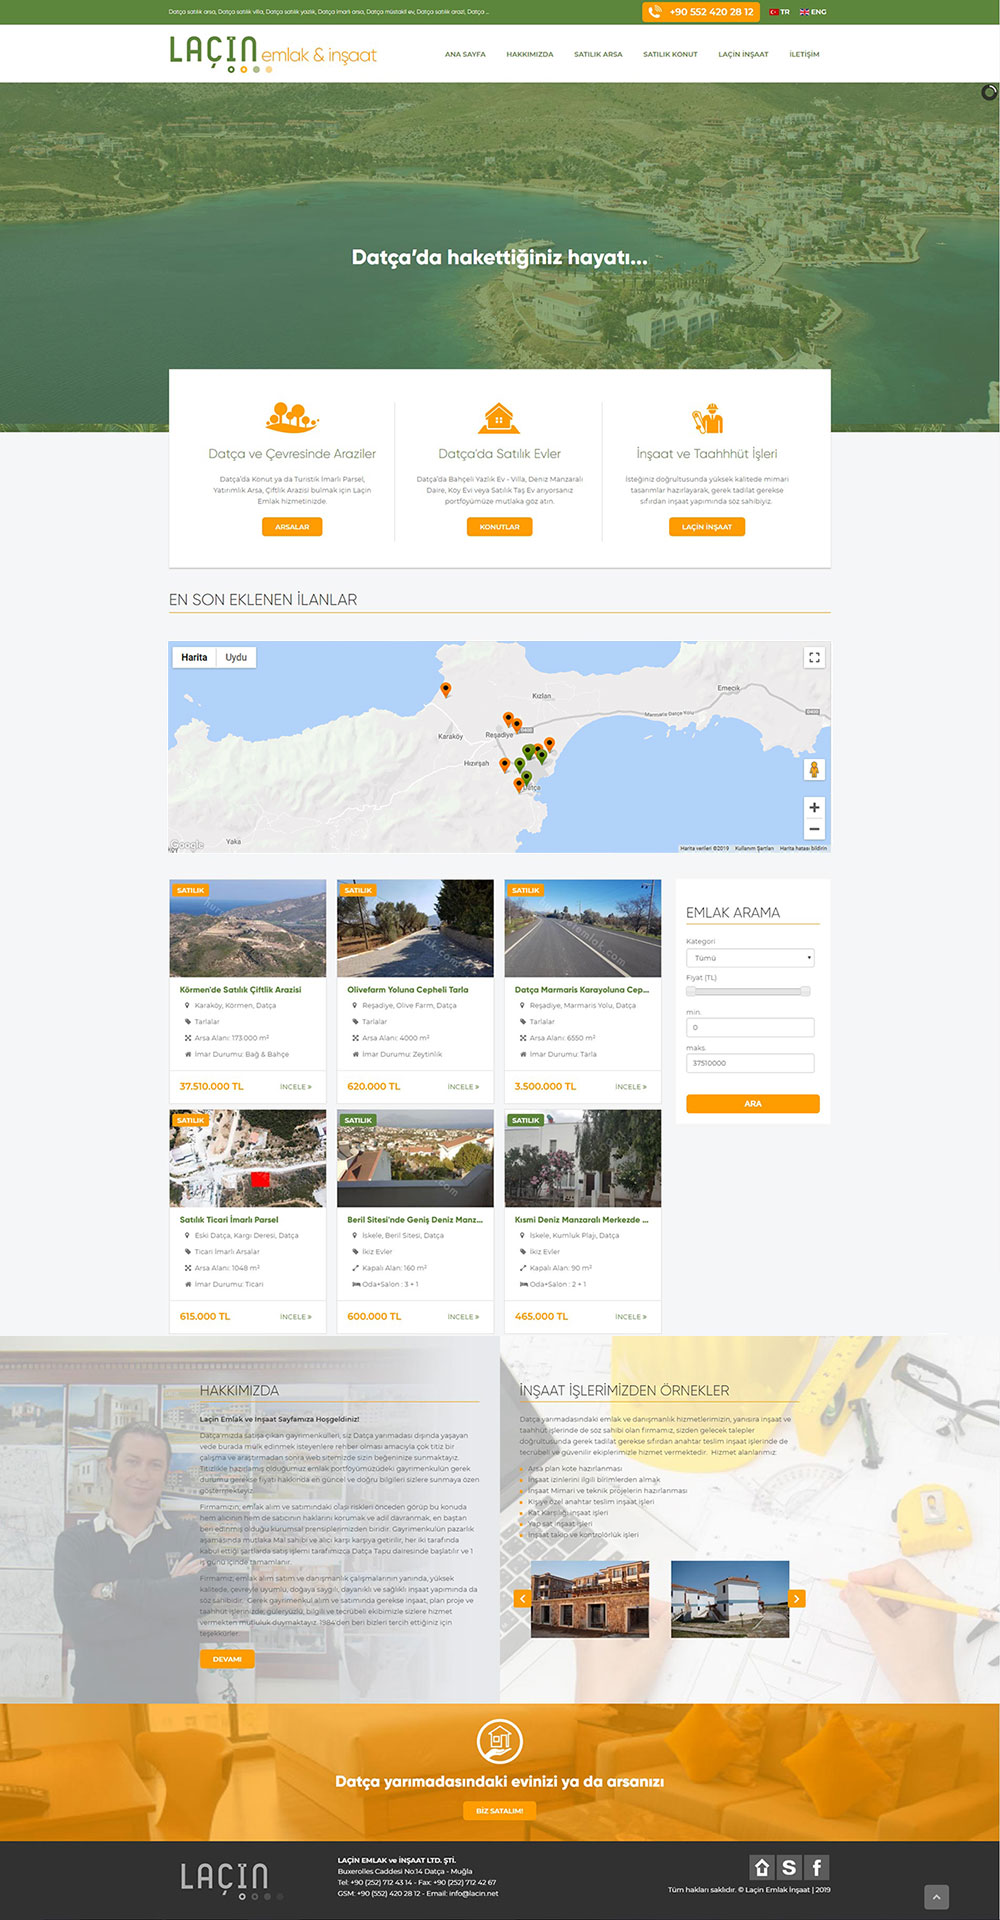 Lacin Real Estate and Construction - Datca Turkey - Responsive Joomla Site